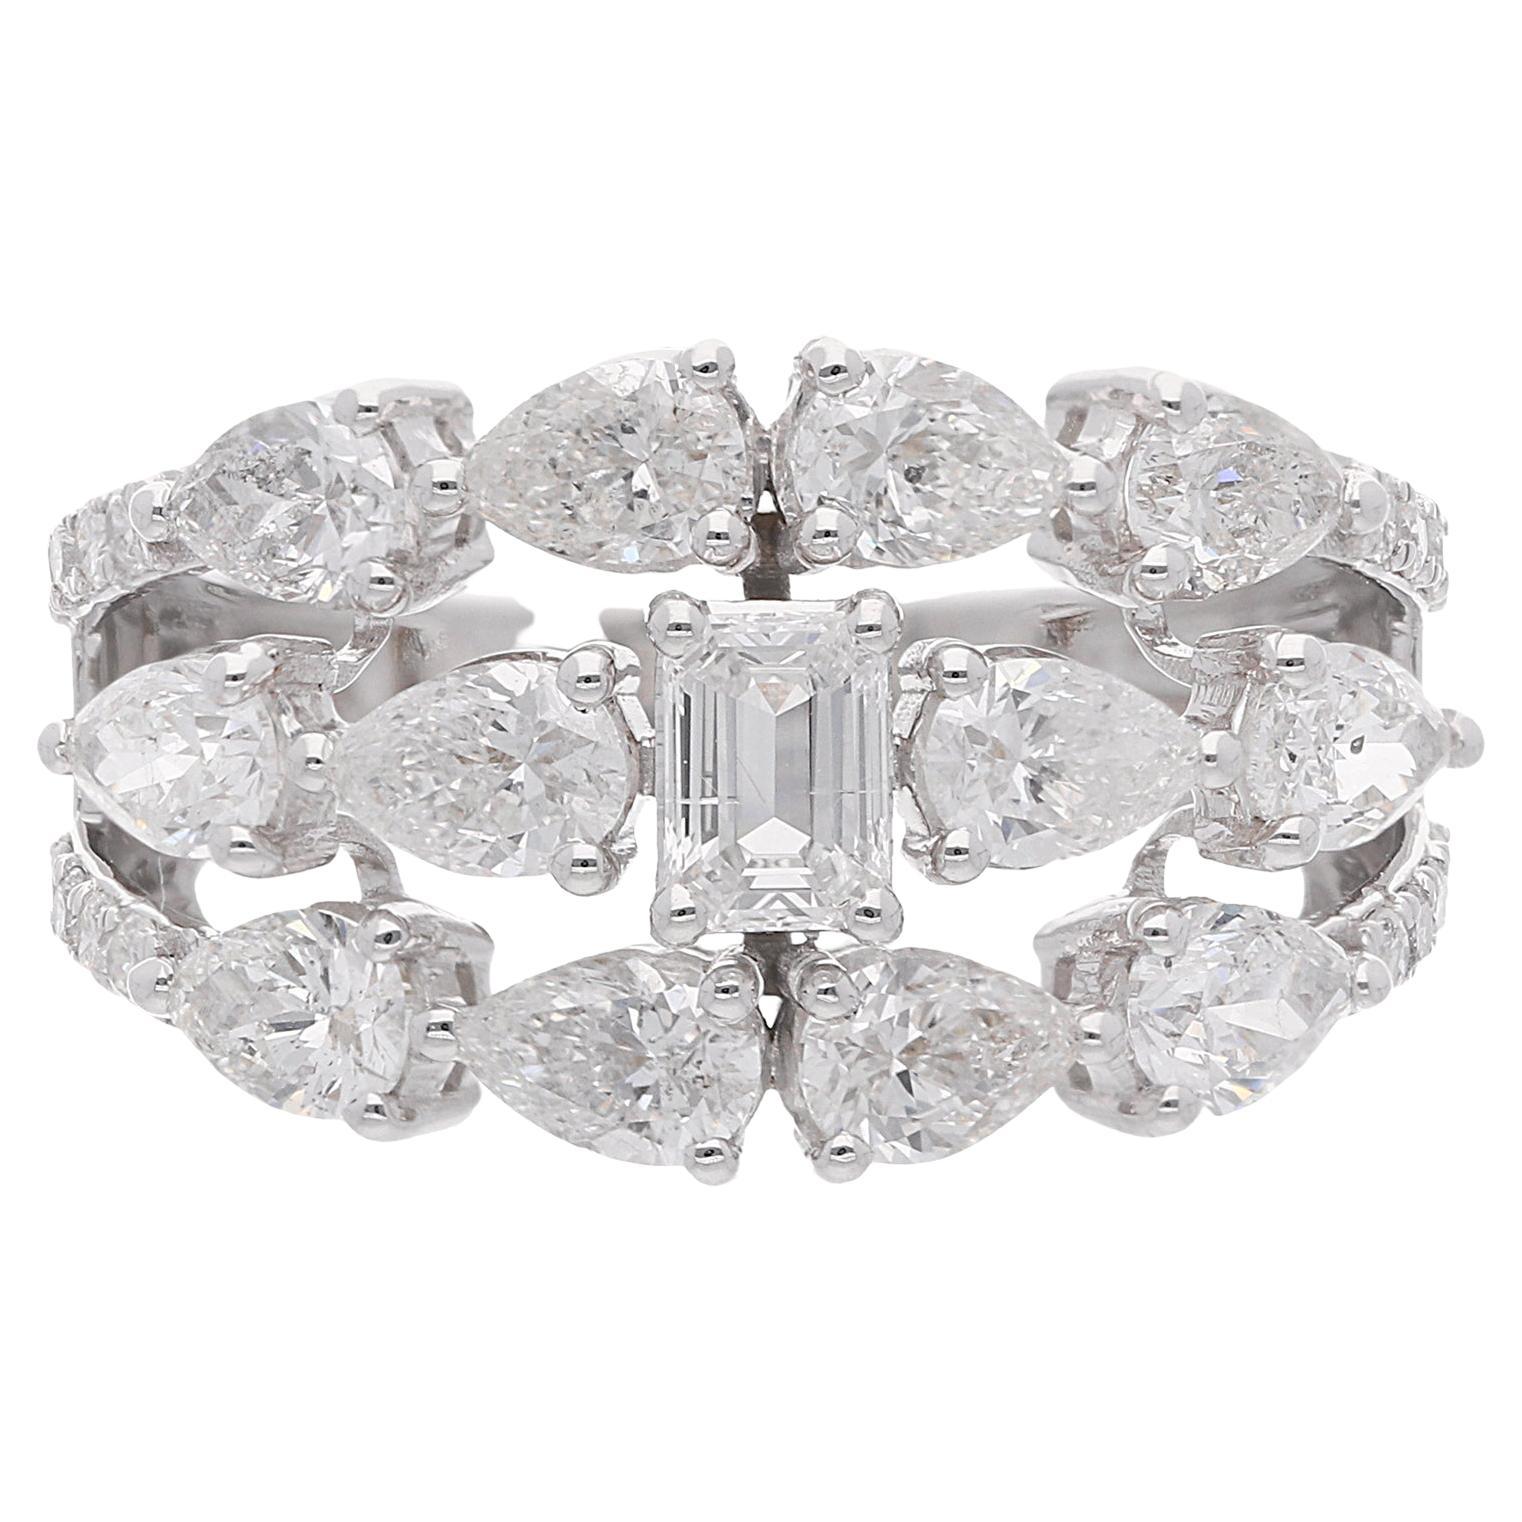 For Sale:  2.75 Carat SI Clarity HI Color Pear Emerald Cut Diamond Ring 18 Karat White Gold